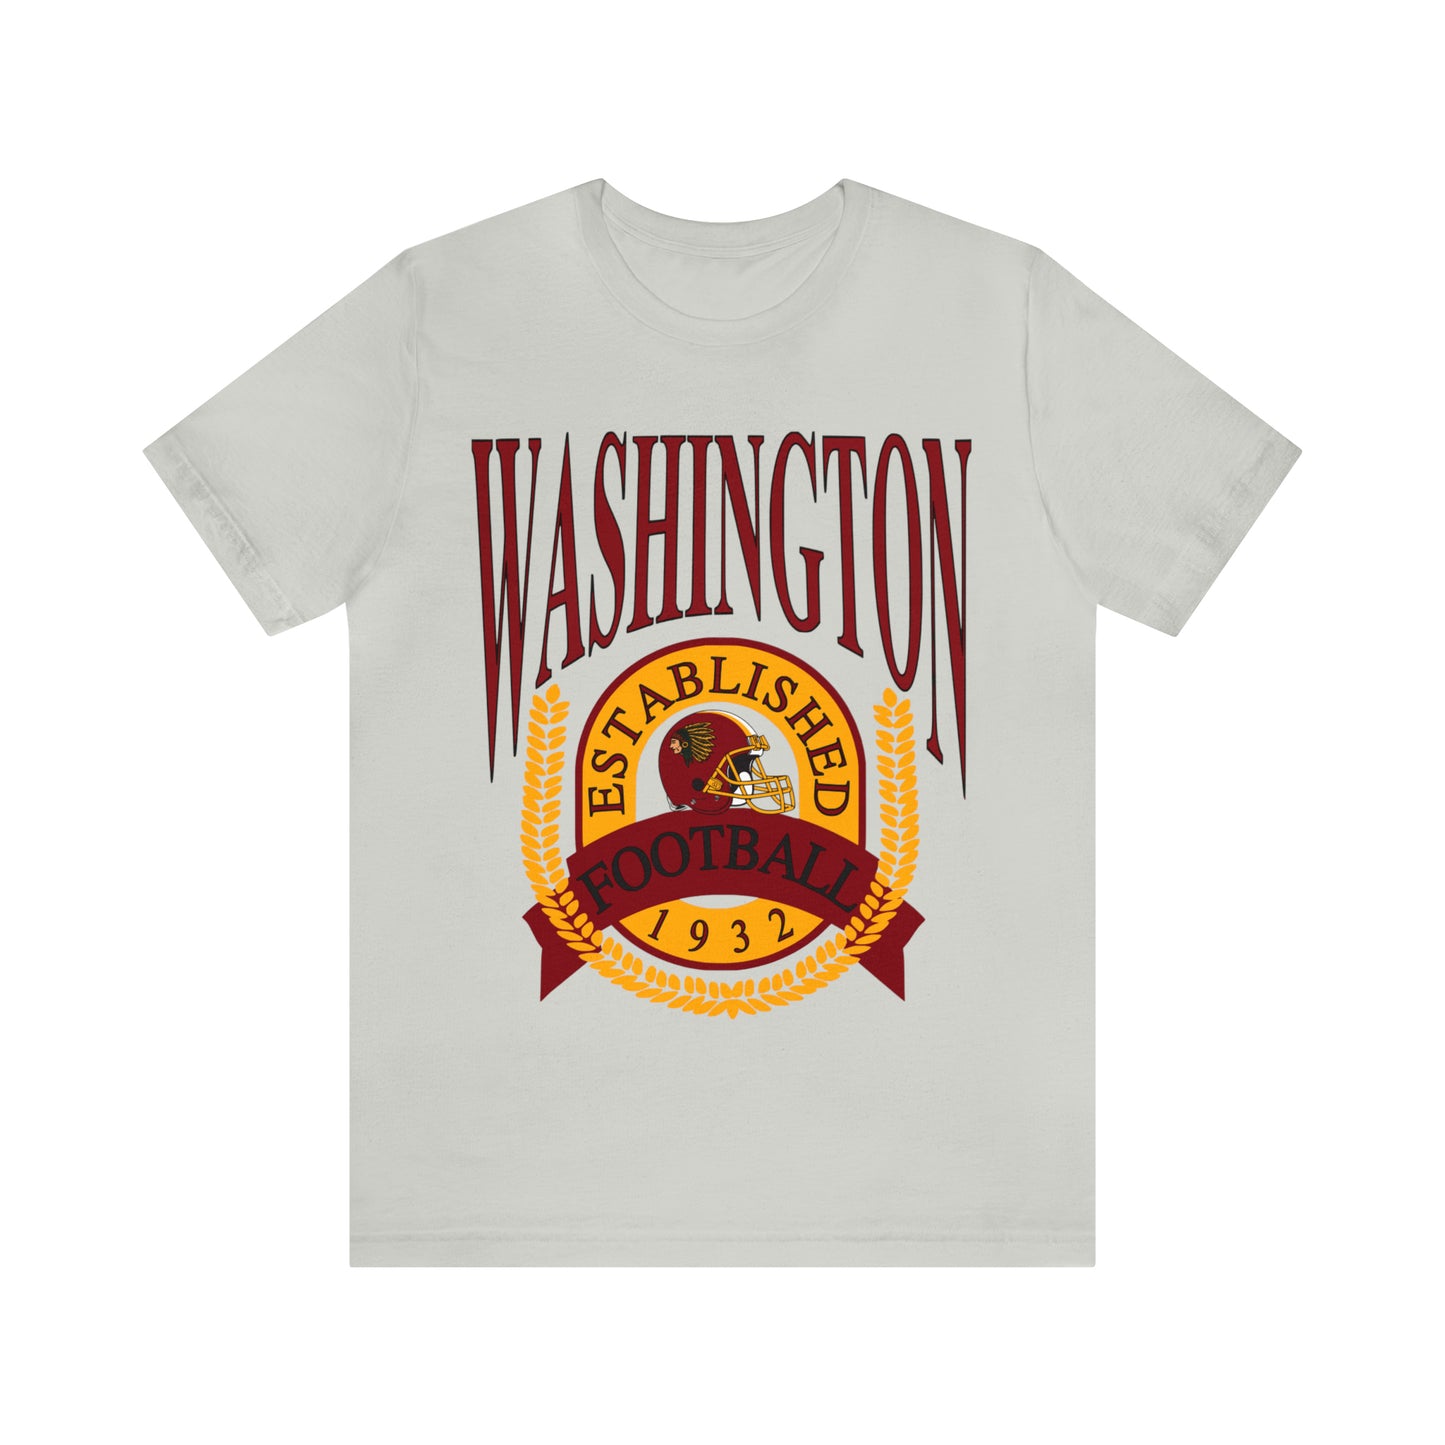 90's Washington Redskins Short Sleeve T-Shirt - Vintage Football Tee - Retro Commanders 70's, 80's, 90's - Design 1